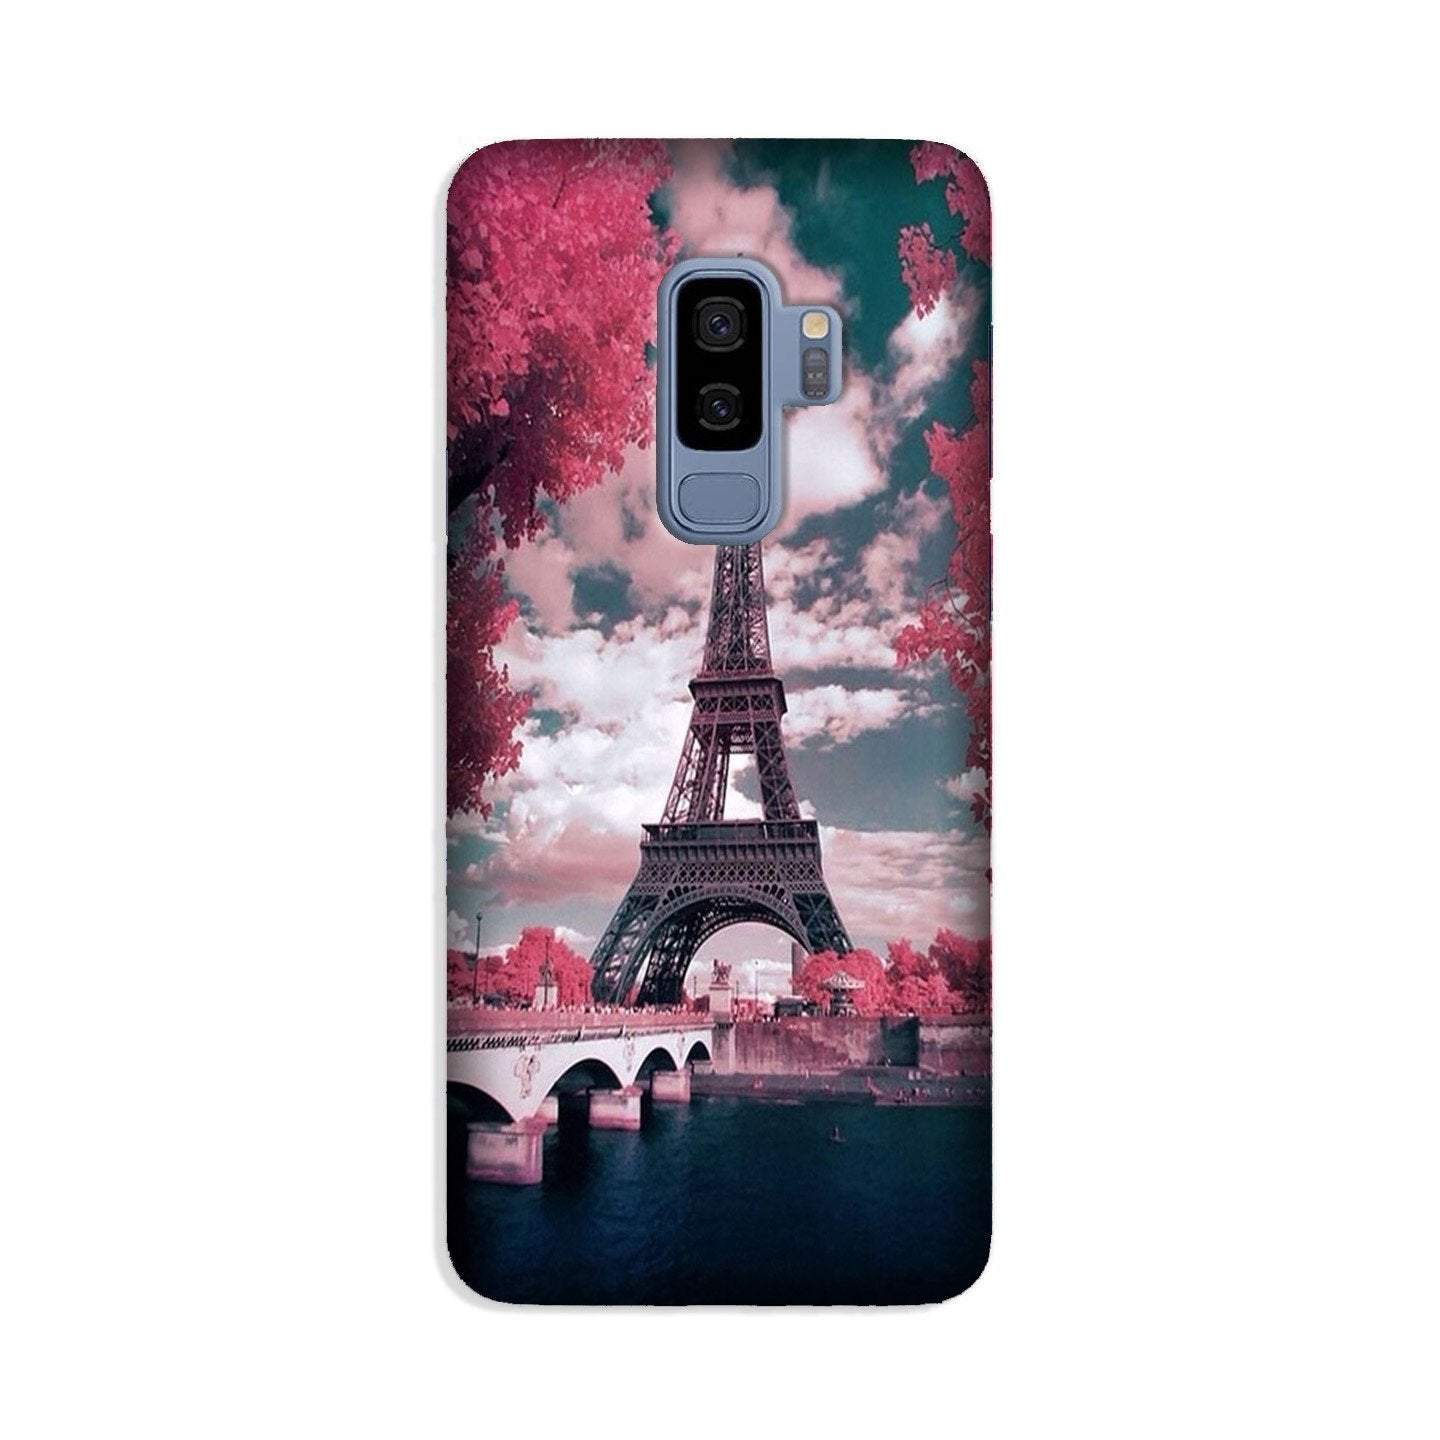 Eiffel Tower Case for Galaxy S9 Plus(Design - 101)